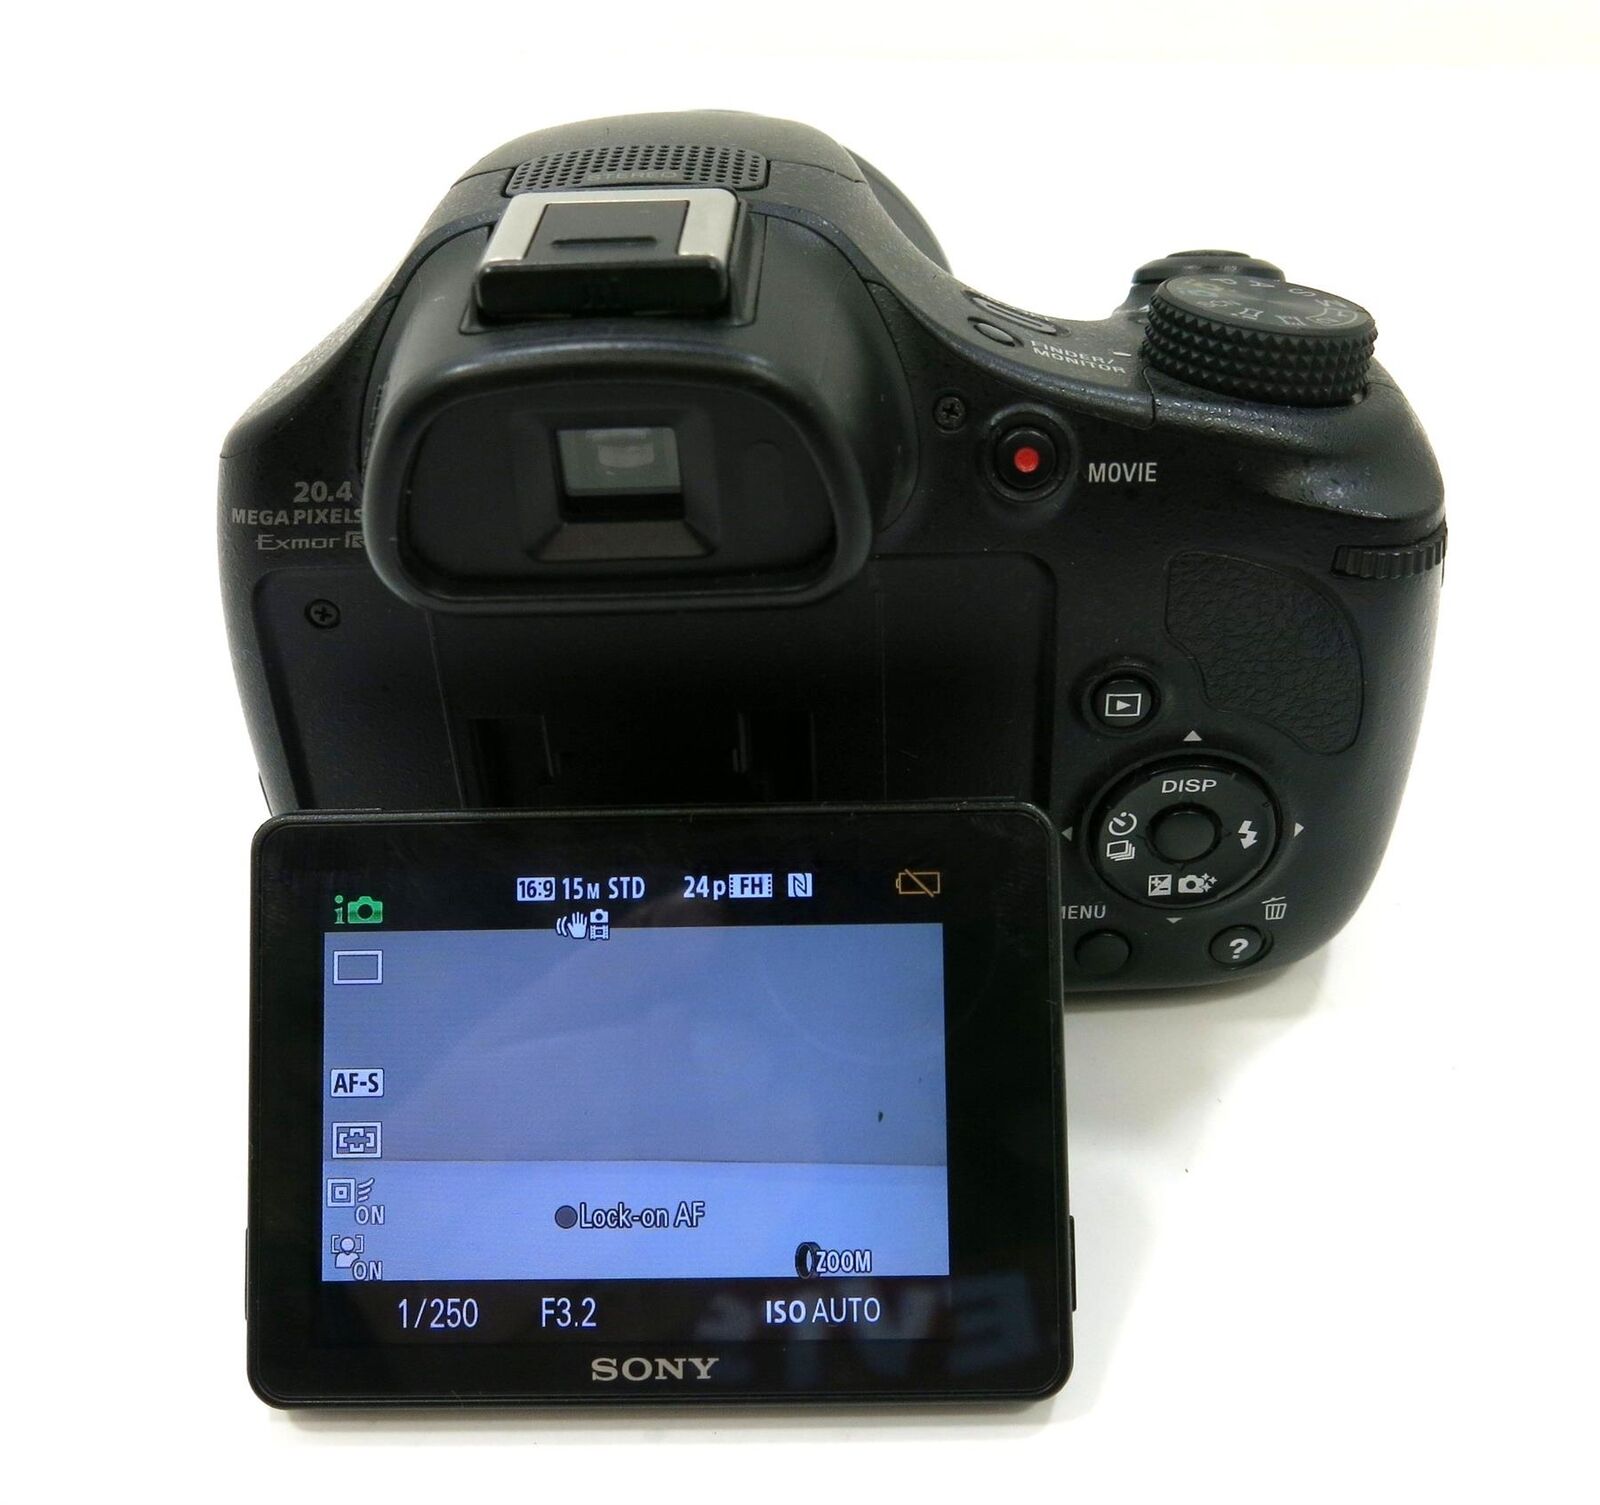 Sony DSC-HX400V Digital Camera - Black for sale online | eBay